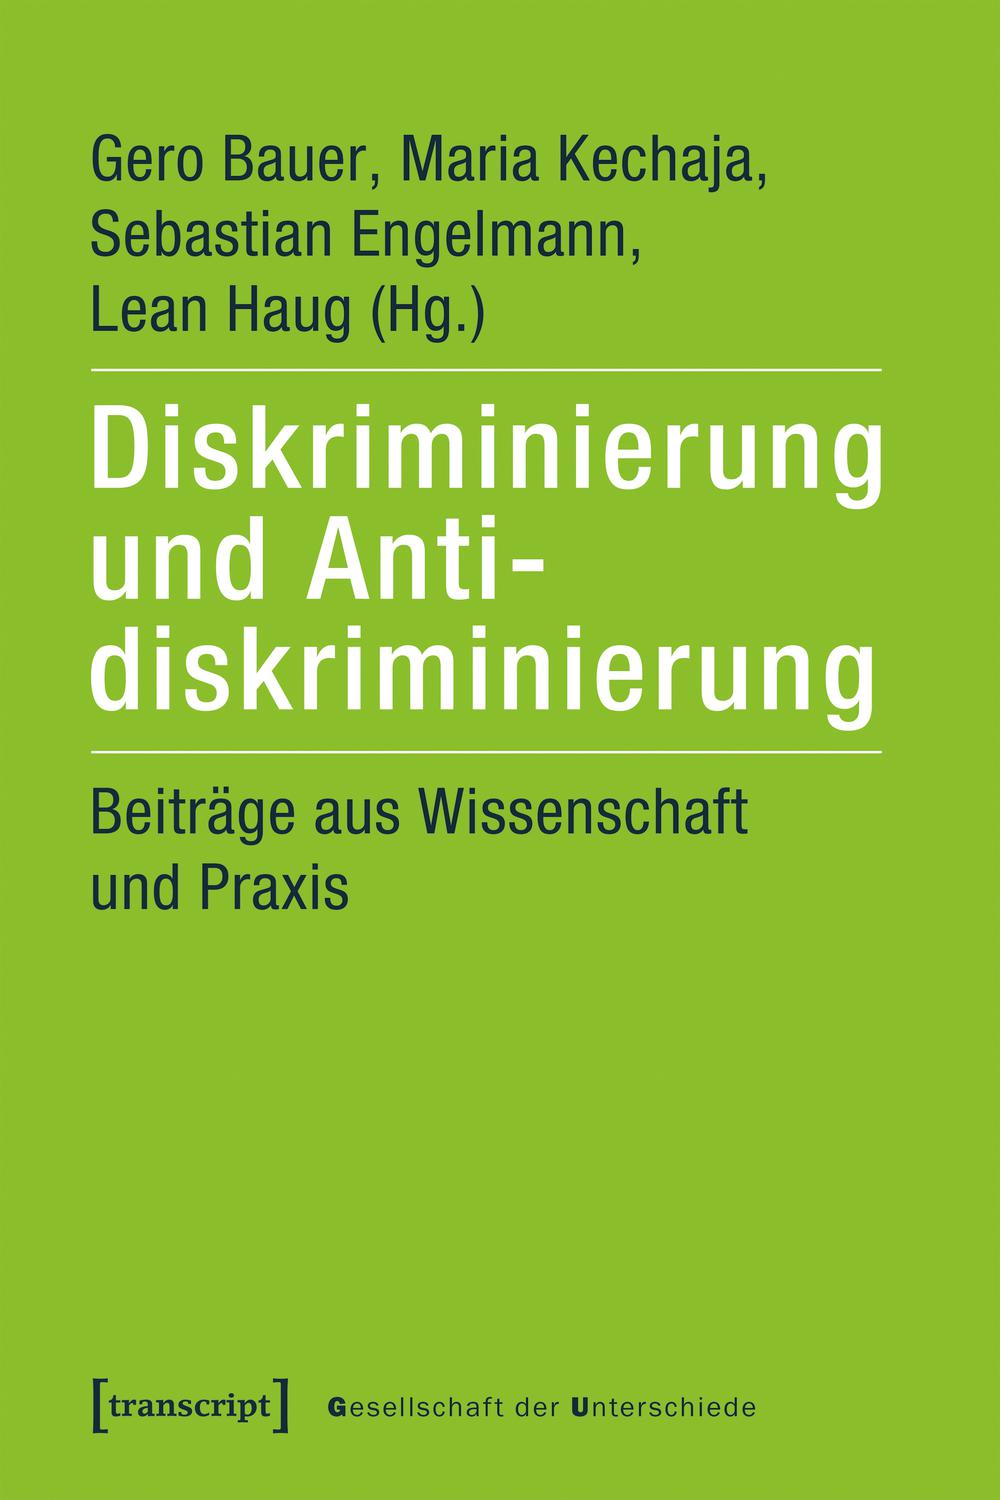 Diskriminierung und Antidiskriminierung - Gero Bauer, Maria Kechaja, Sebastian Engelmann, Lean Haug